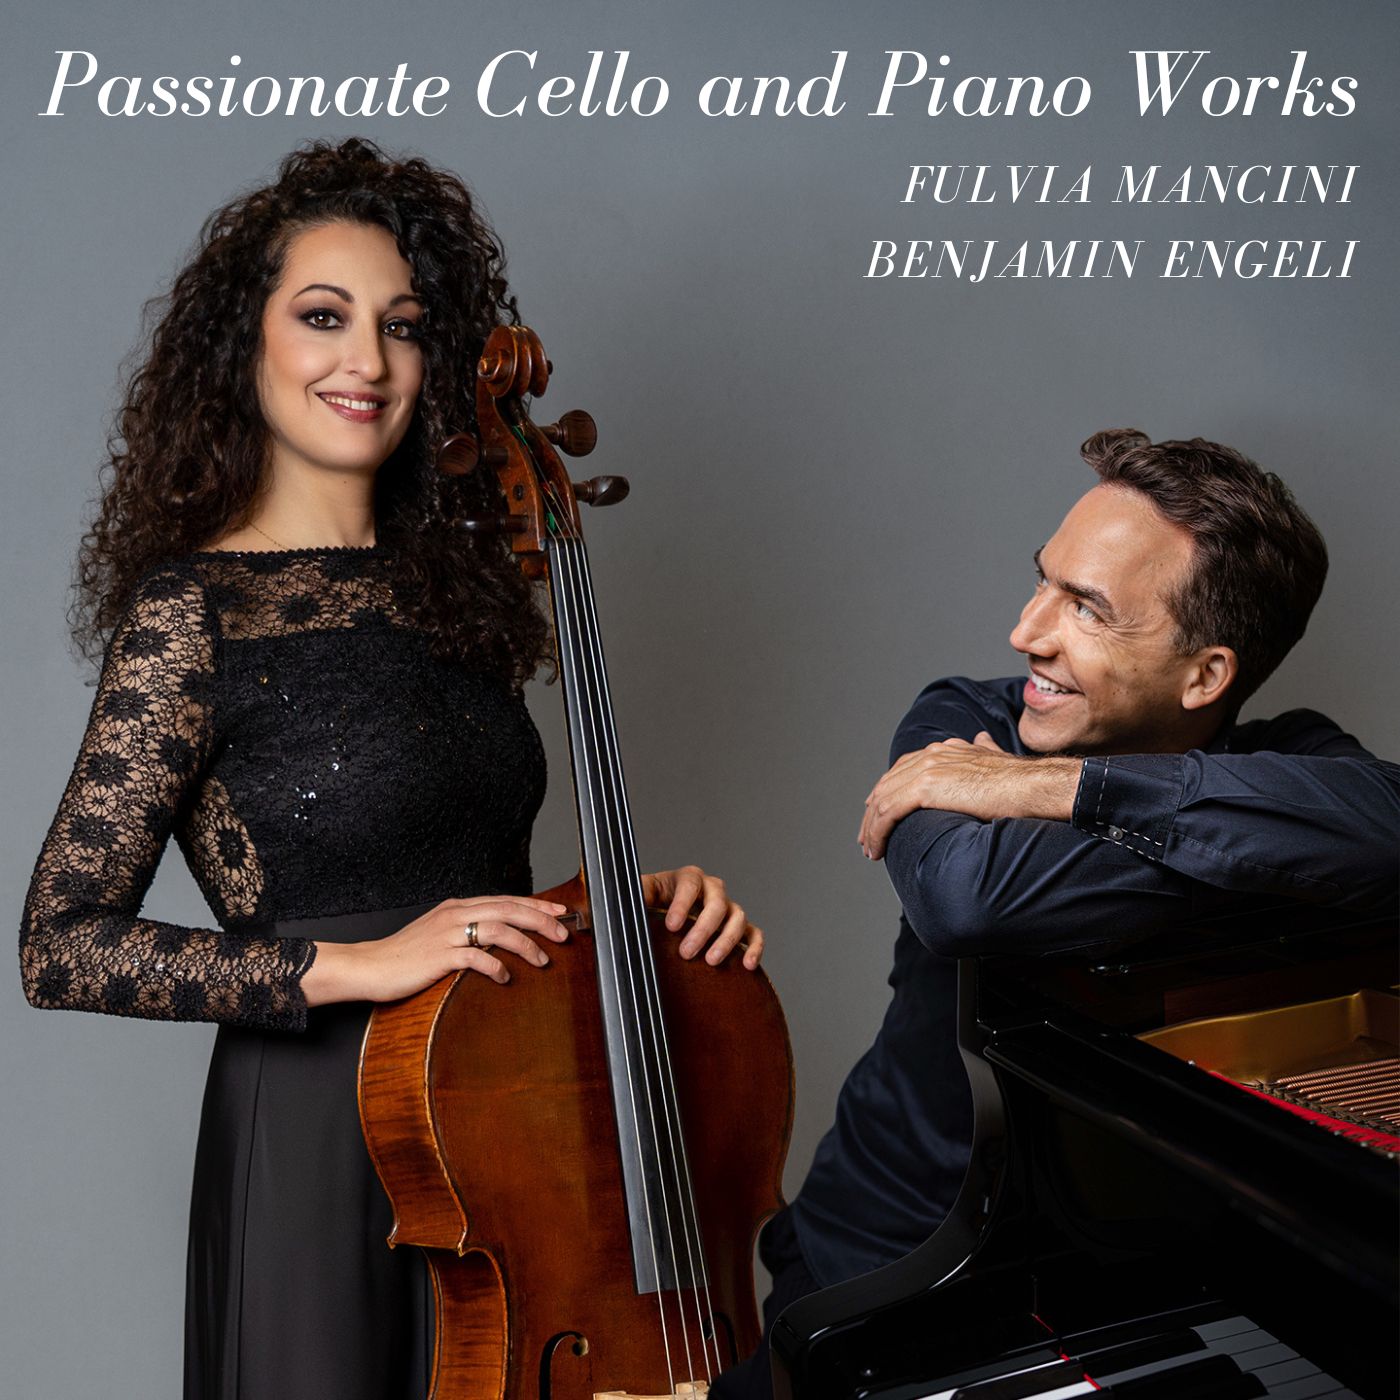 Passionate Cello and Piano Works